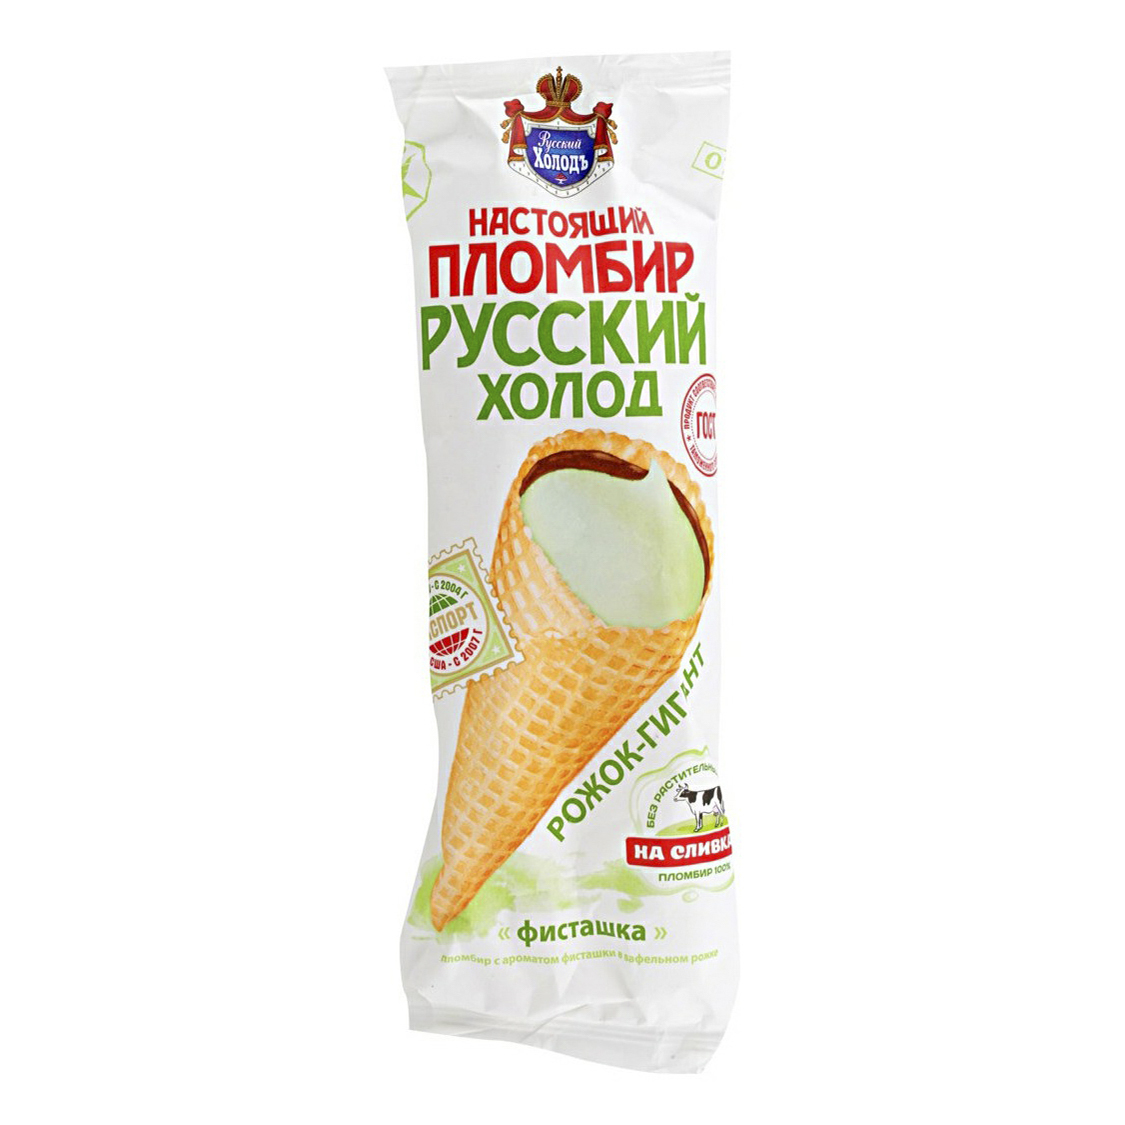 Мороженое Русский холодъ Настоящий пломбир рожок, фисташка, 12%, 110 г